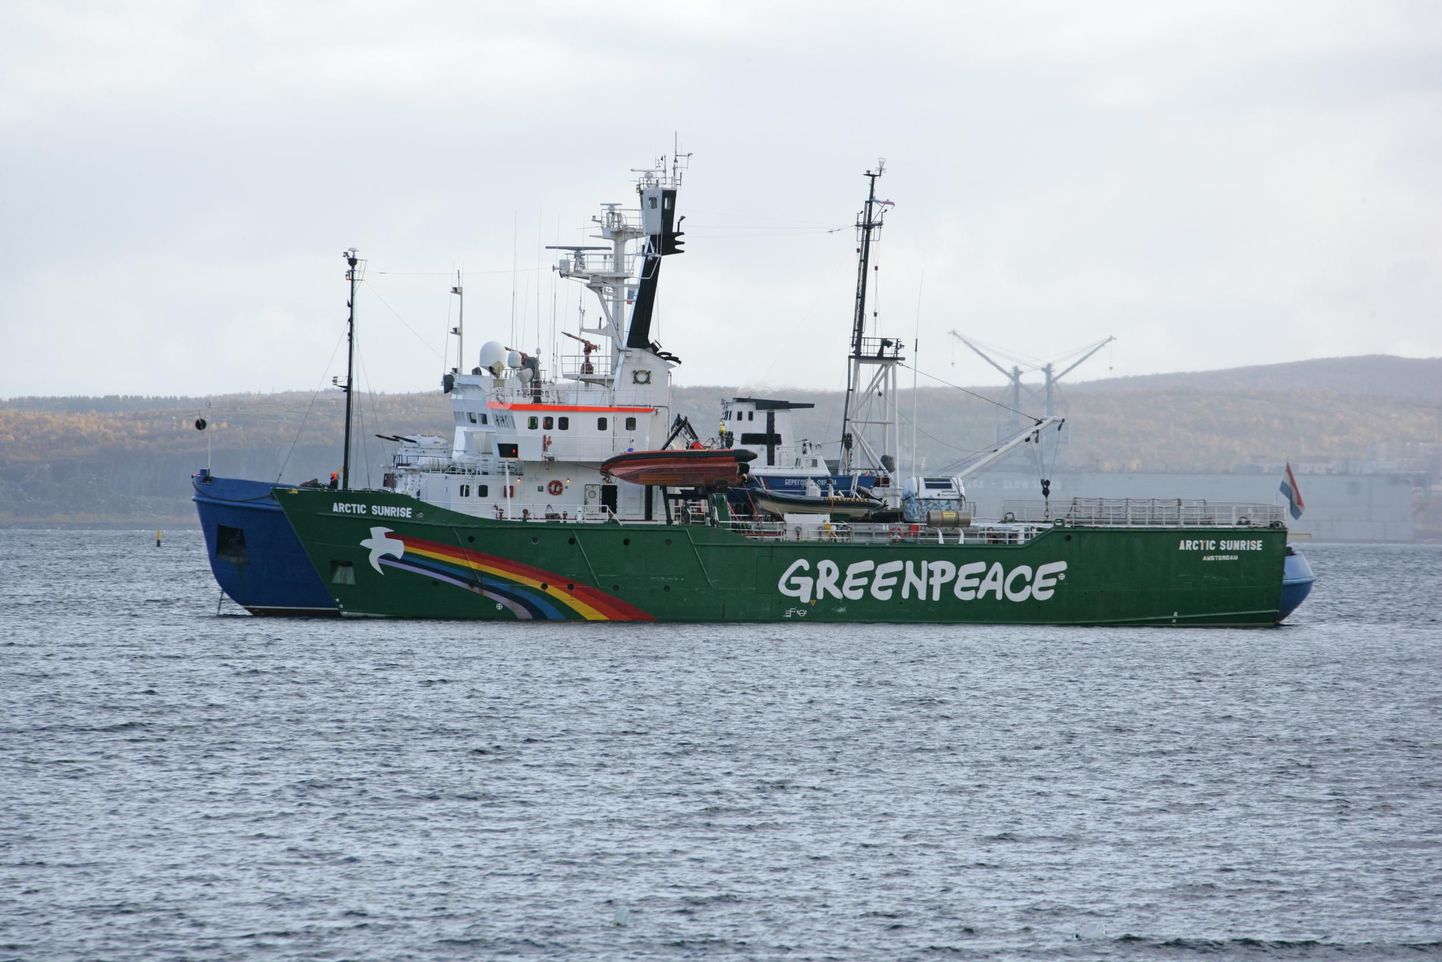 Greenpeace'i laev Arctic Sunrise